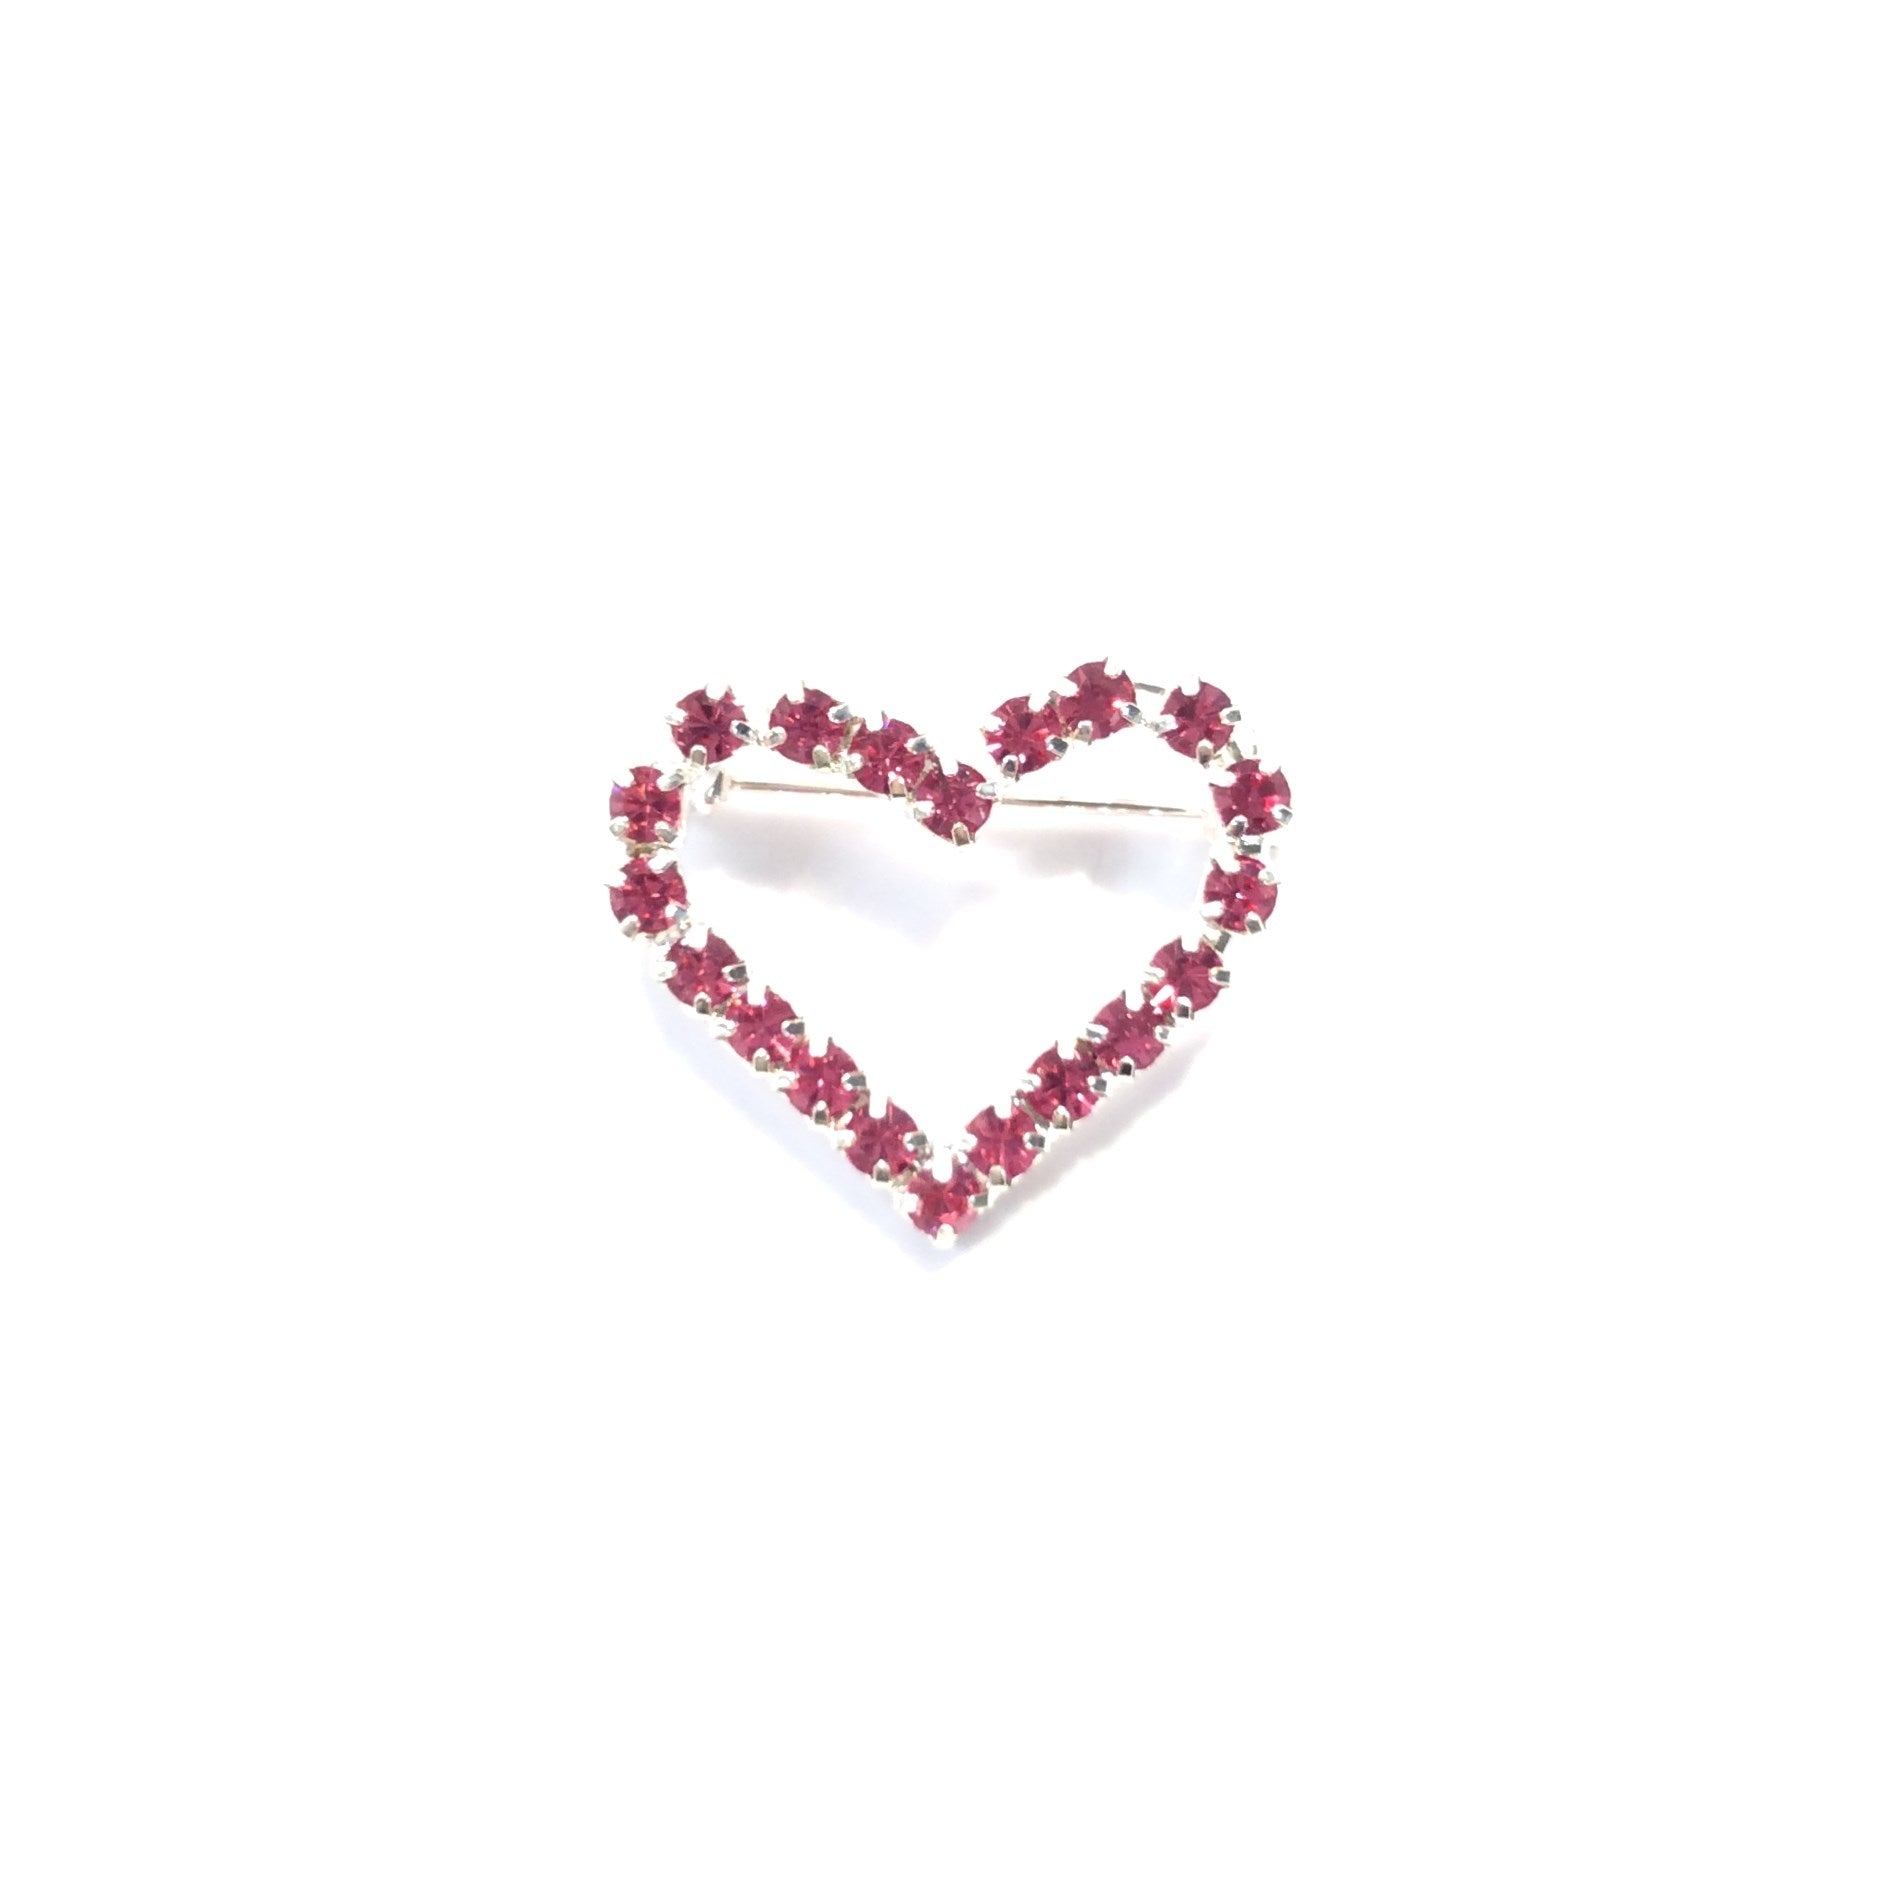 Heart Pin #28-11001PK (Pink)